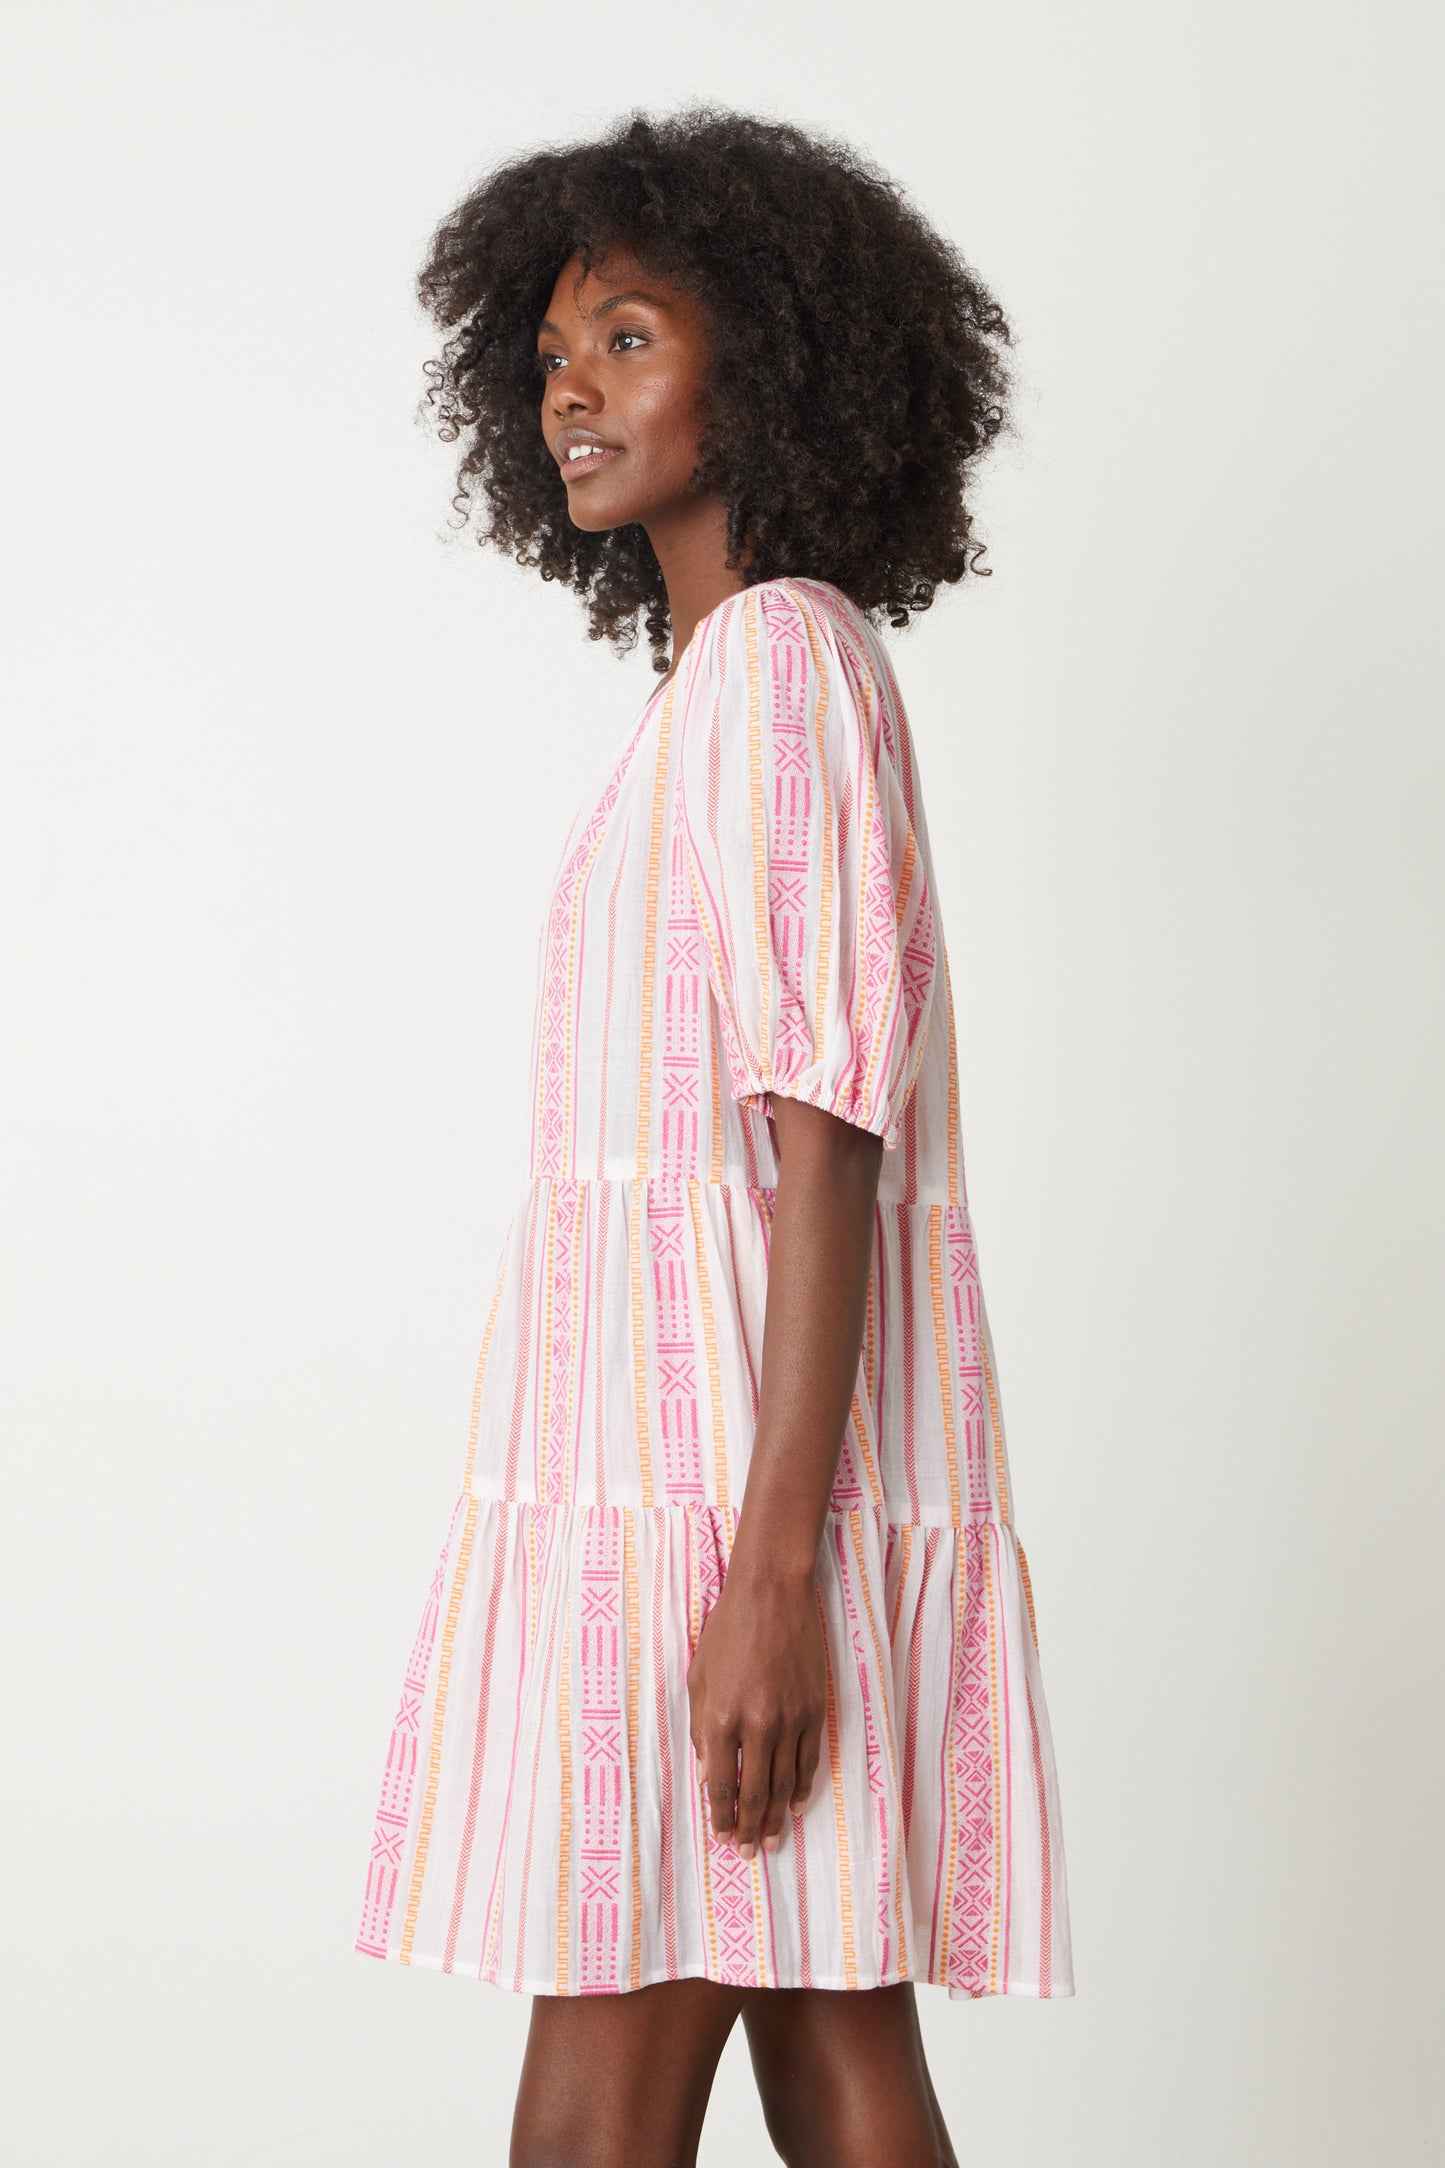 The model is wearing a Velvet by Graham & Spencer MONIQUE JACQUARD BOHO DRESS in pink and white stripe jacquard print-26577324507329